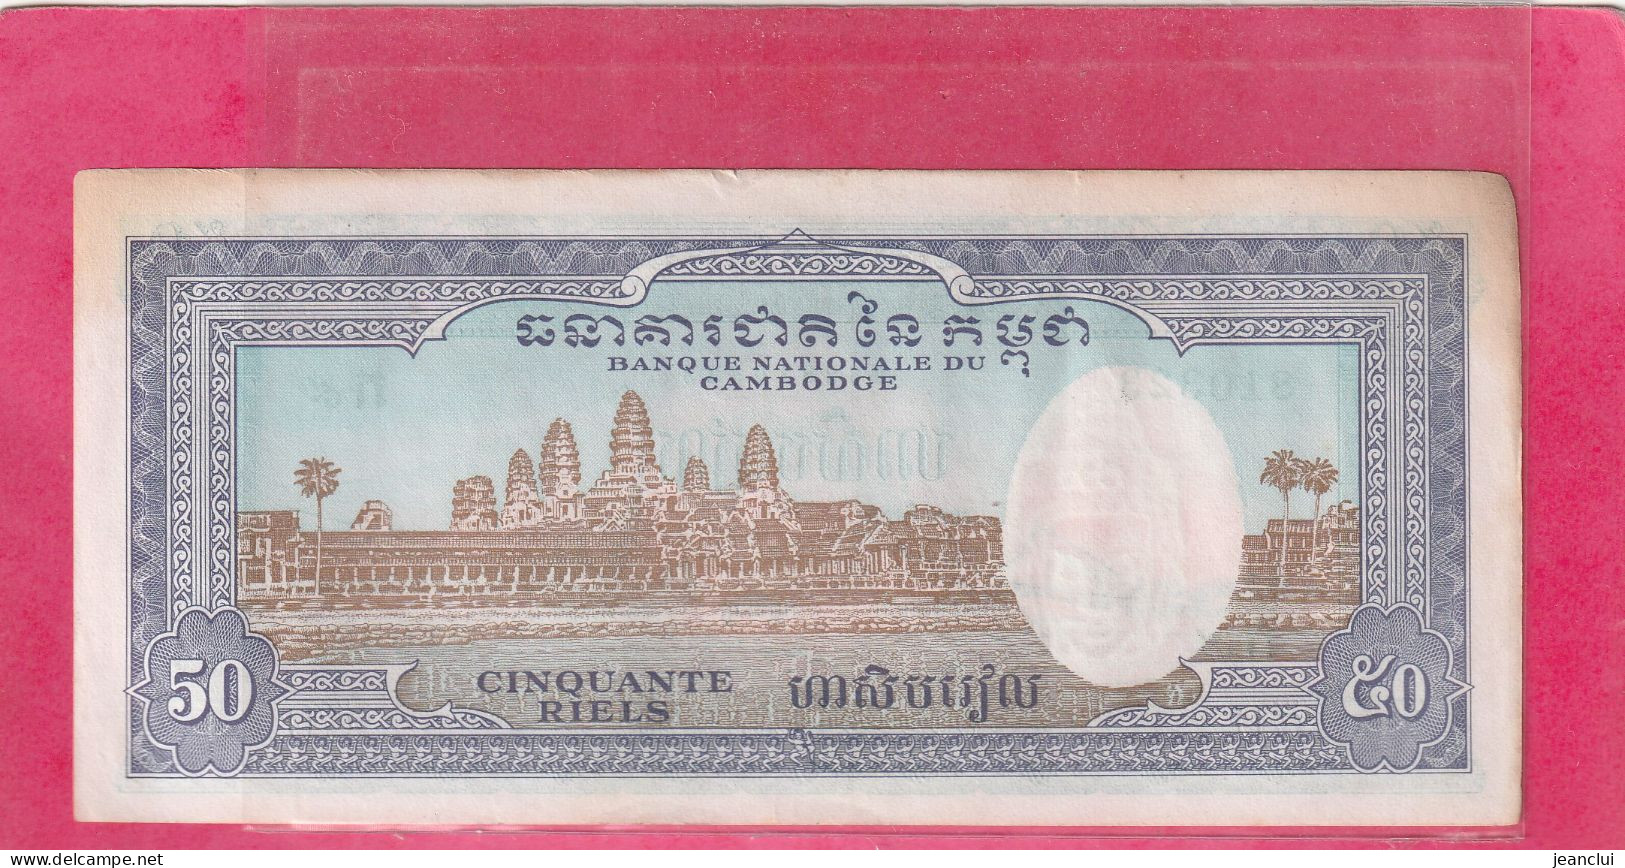 BANQUE NATIONALE DU CAMBODGE  .  50 RIELS    . N°  810323  .  BILLET EN BEL ETAT  .  2 SCANNES - Cambodge